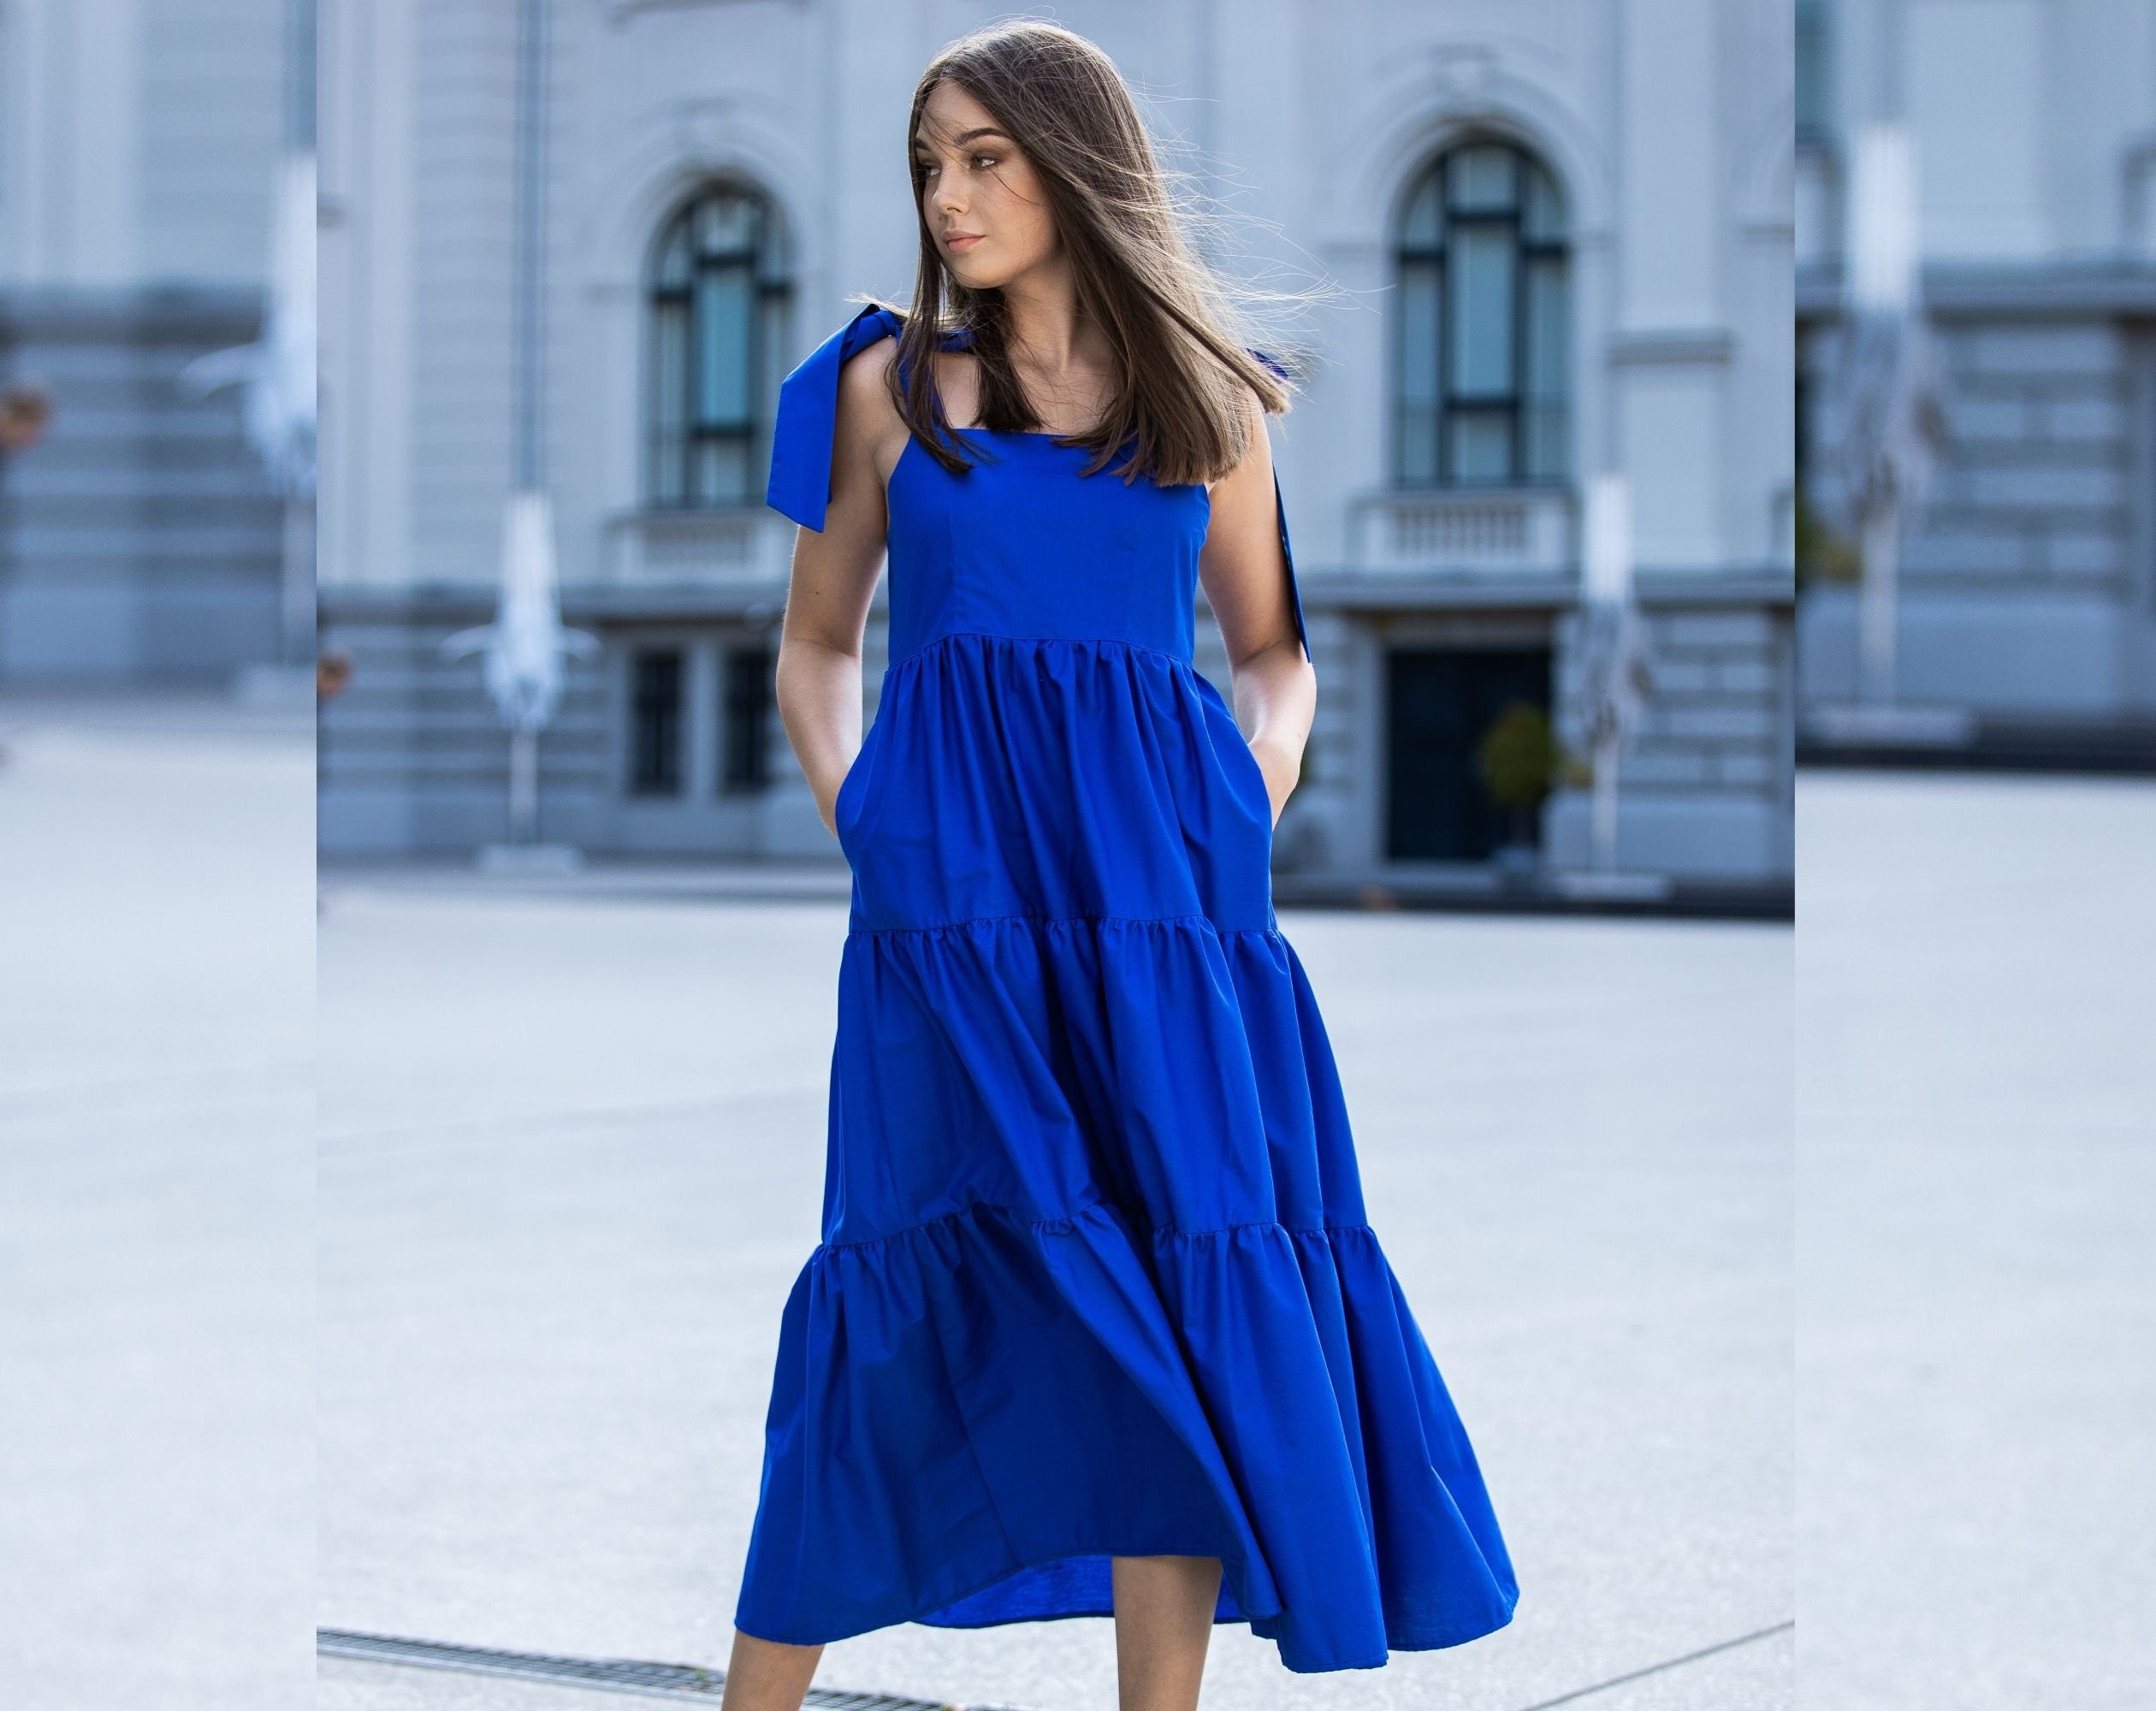 Bright Blue Summer Dress